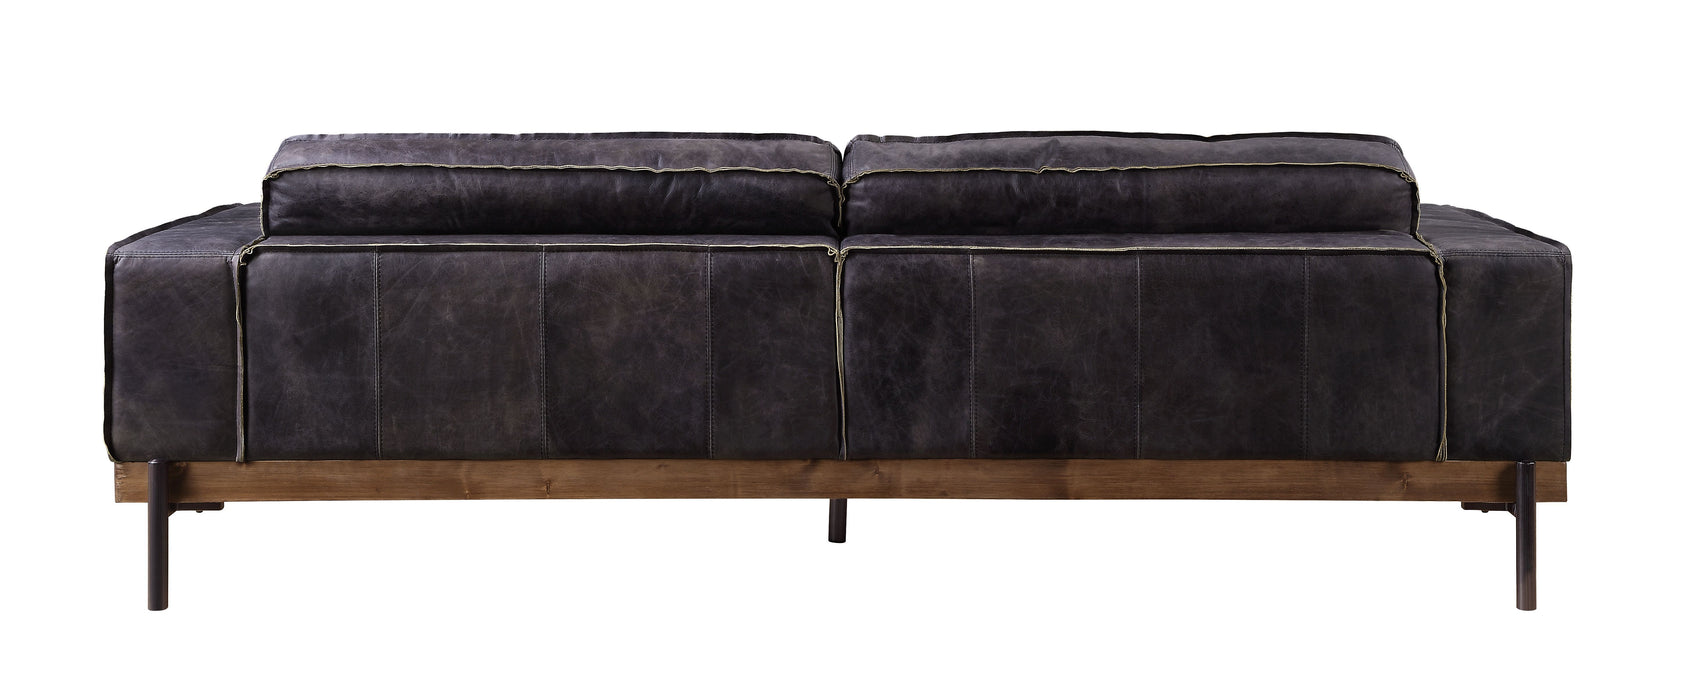 Silchester - Sofa - Antique Ebony Top Grain Leather Unique Piece Furniture